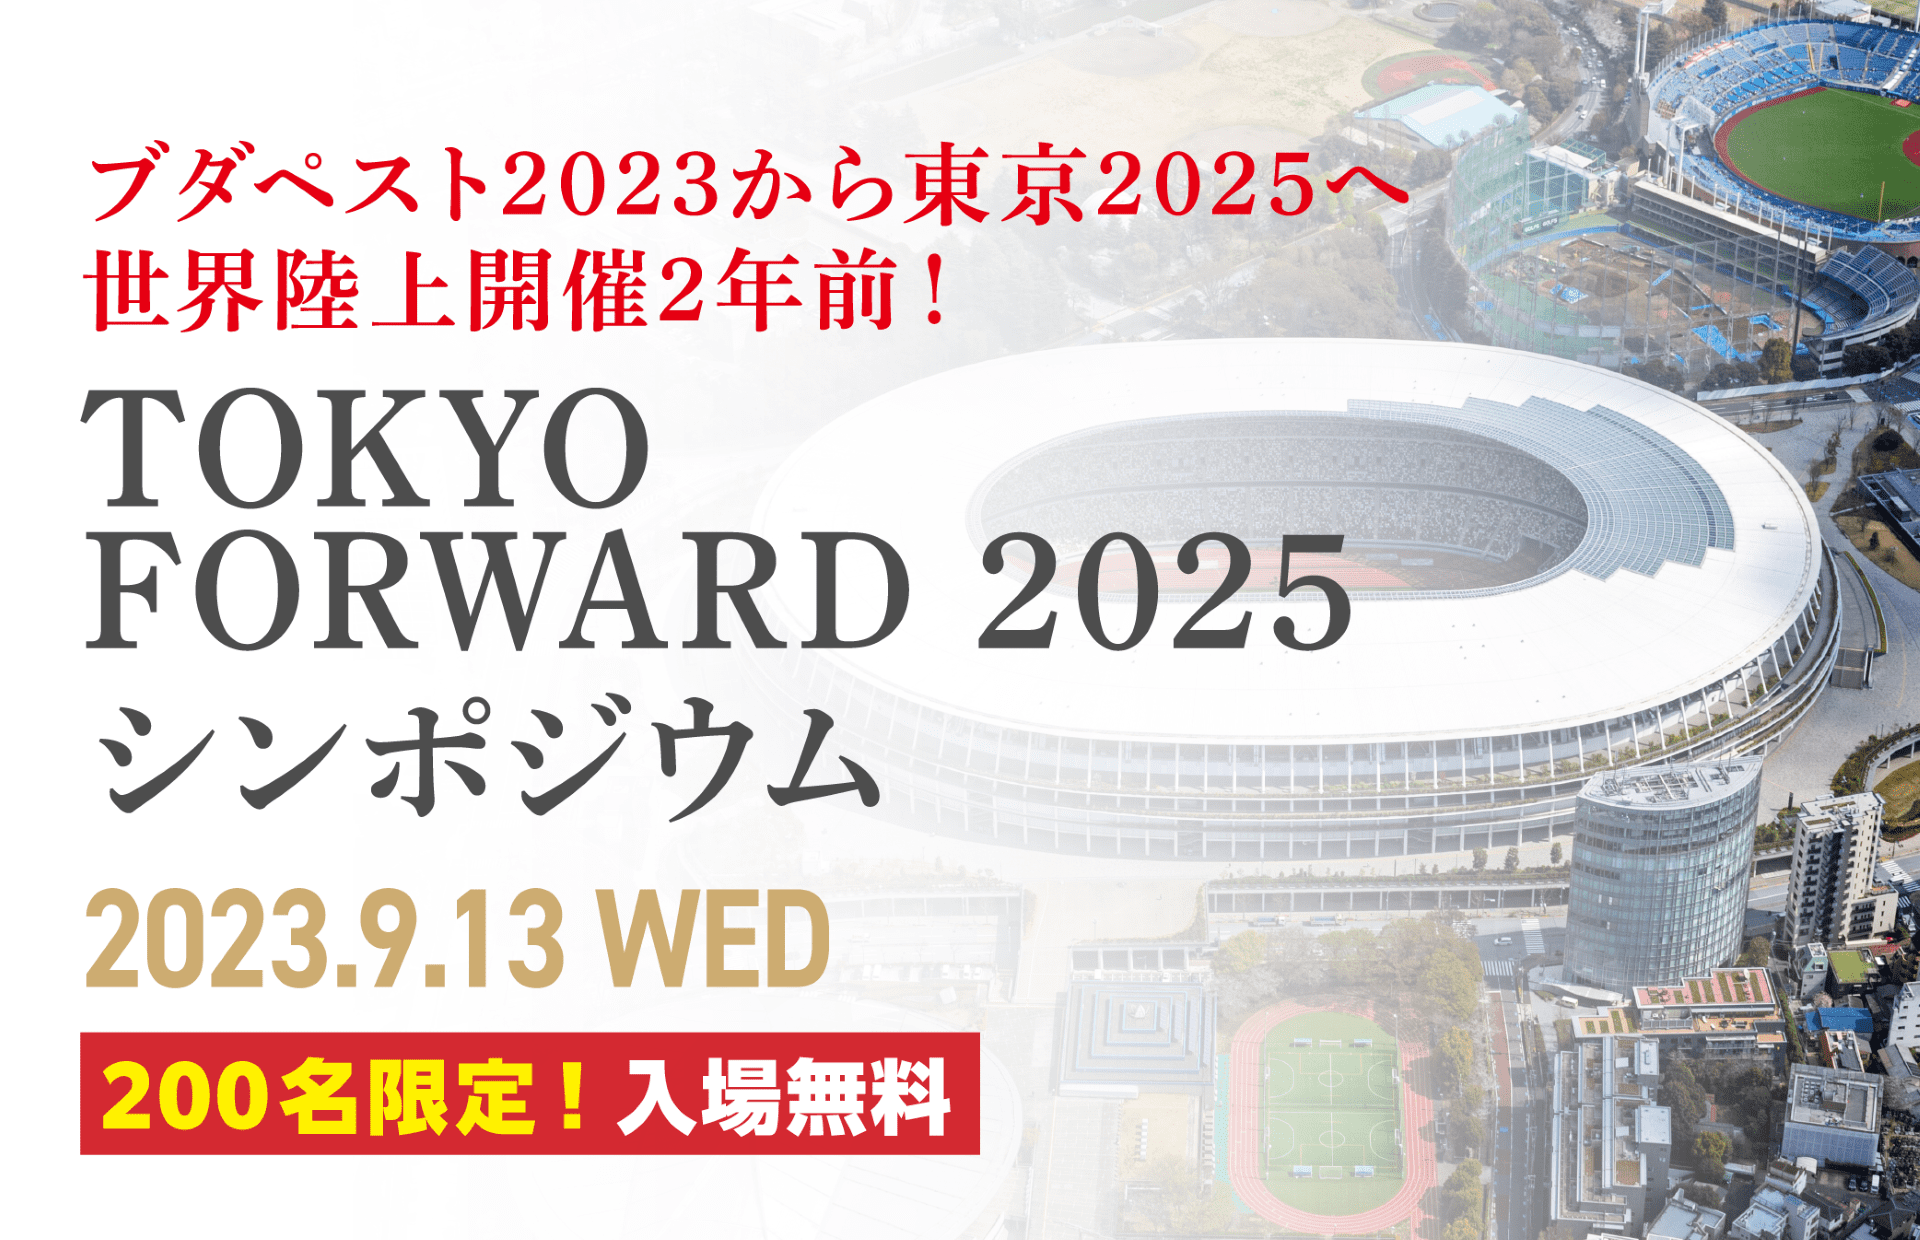 TOKYO FORWARD 2025 シンポジウム